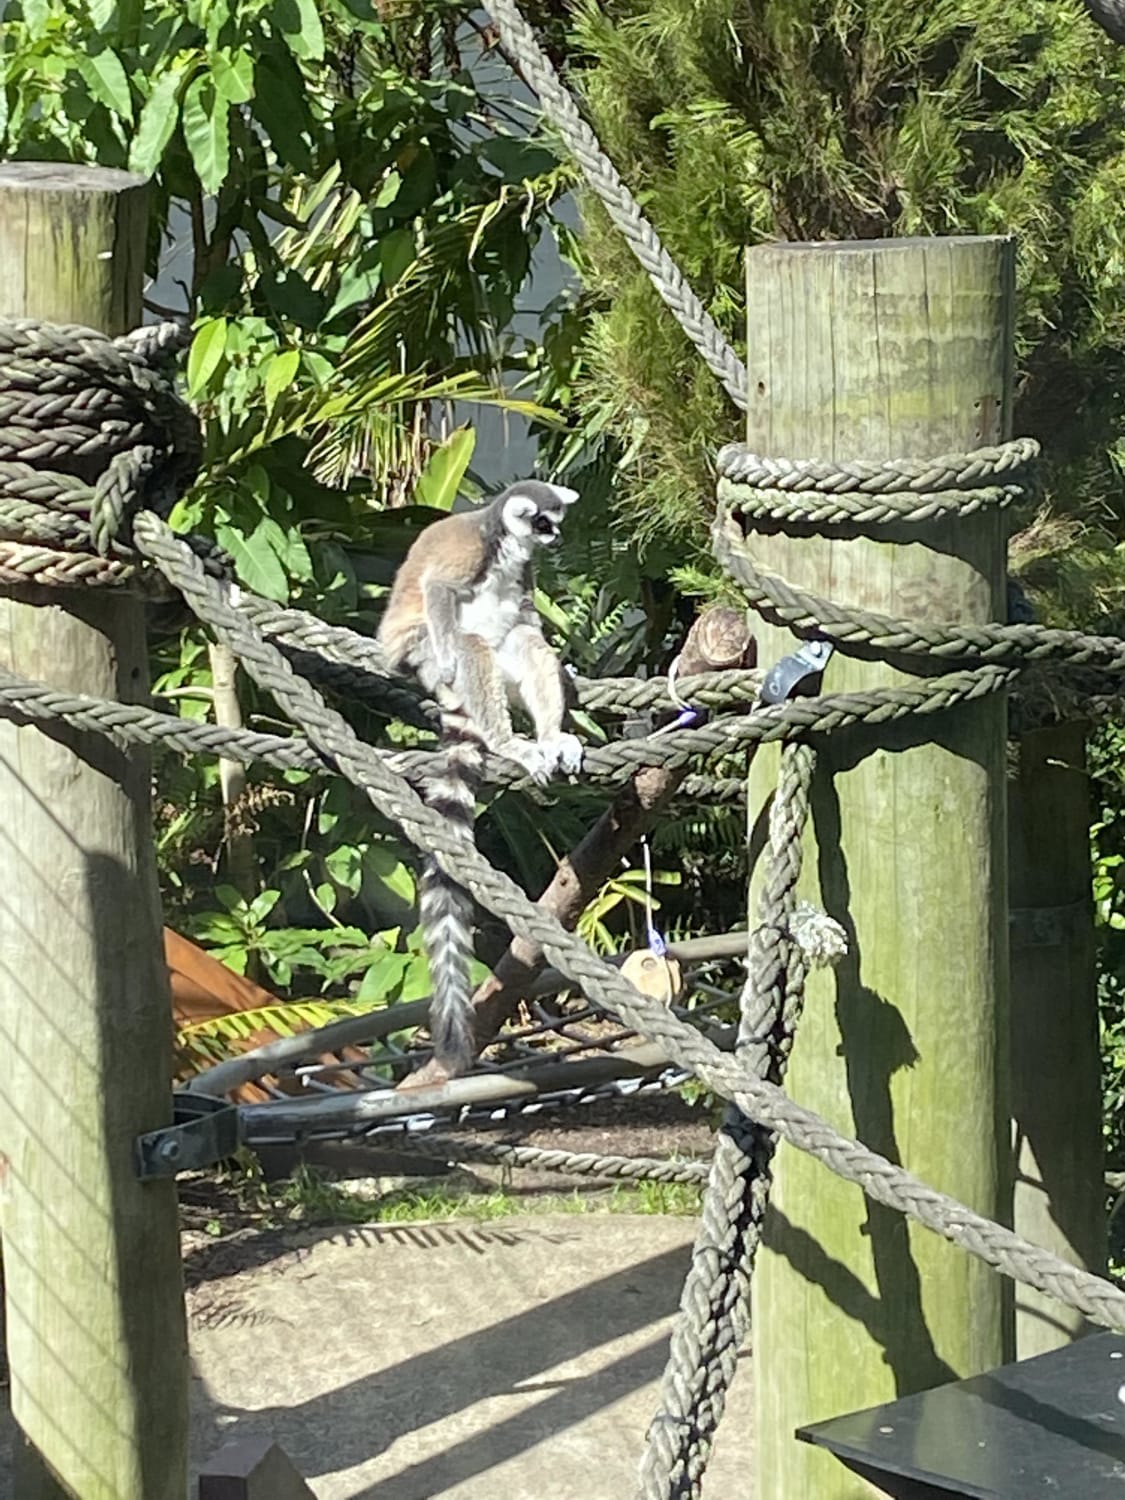 Lemur contemplating life